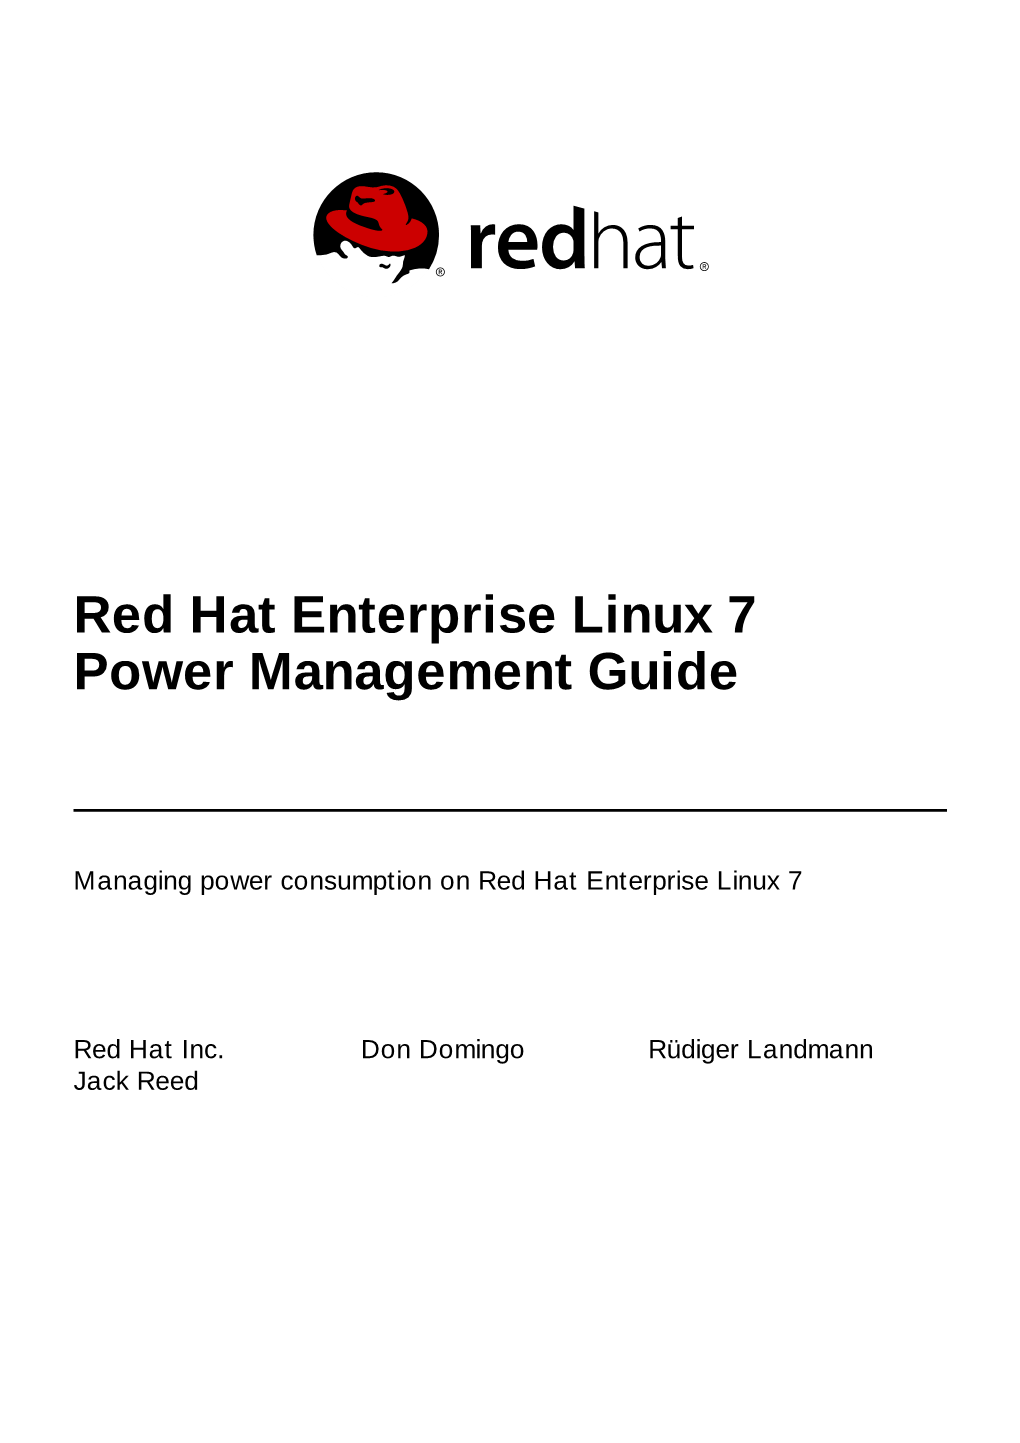 Red Hat Enterprise Linux 7 Power Management Guide